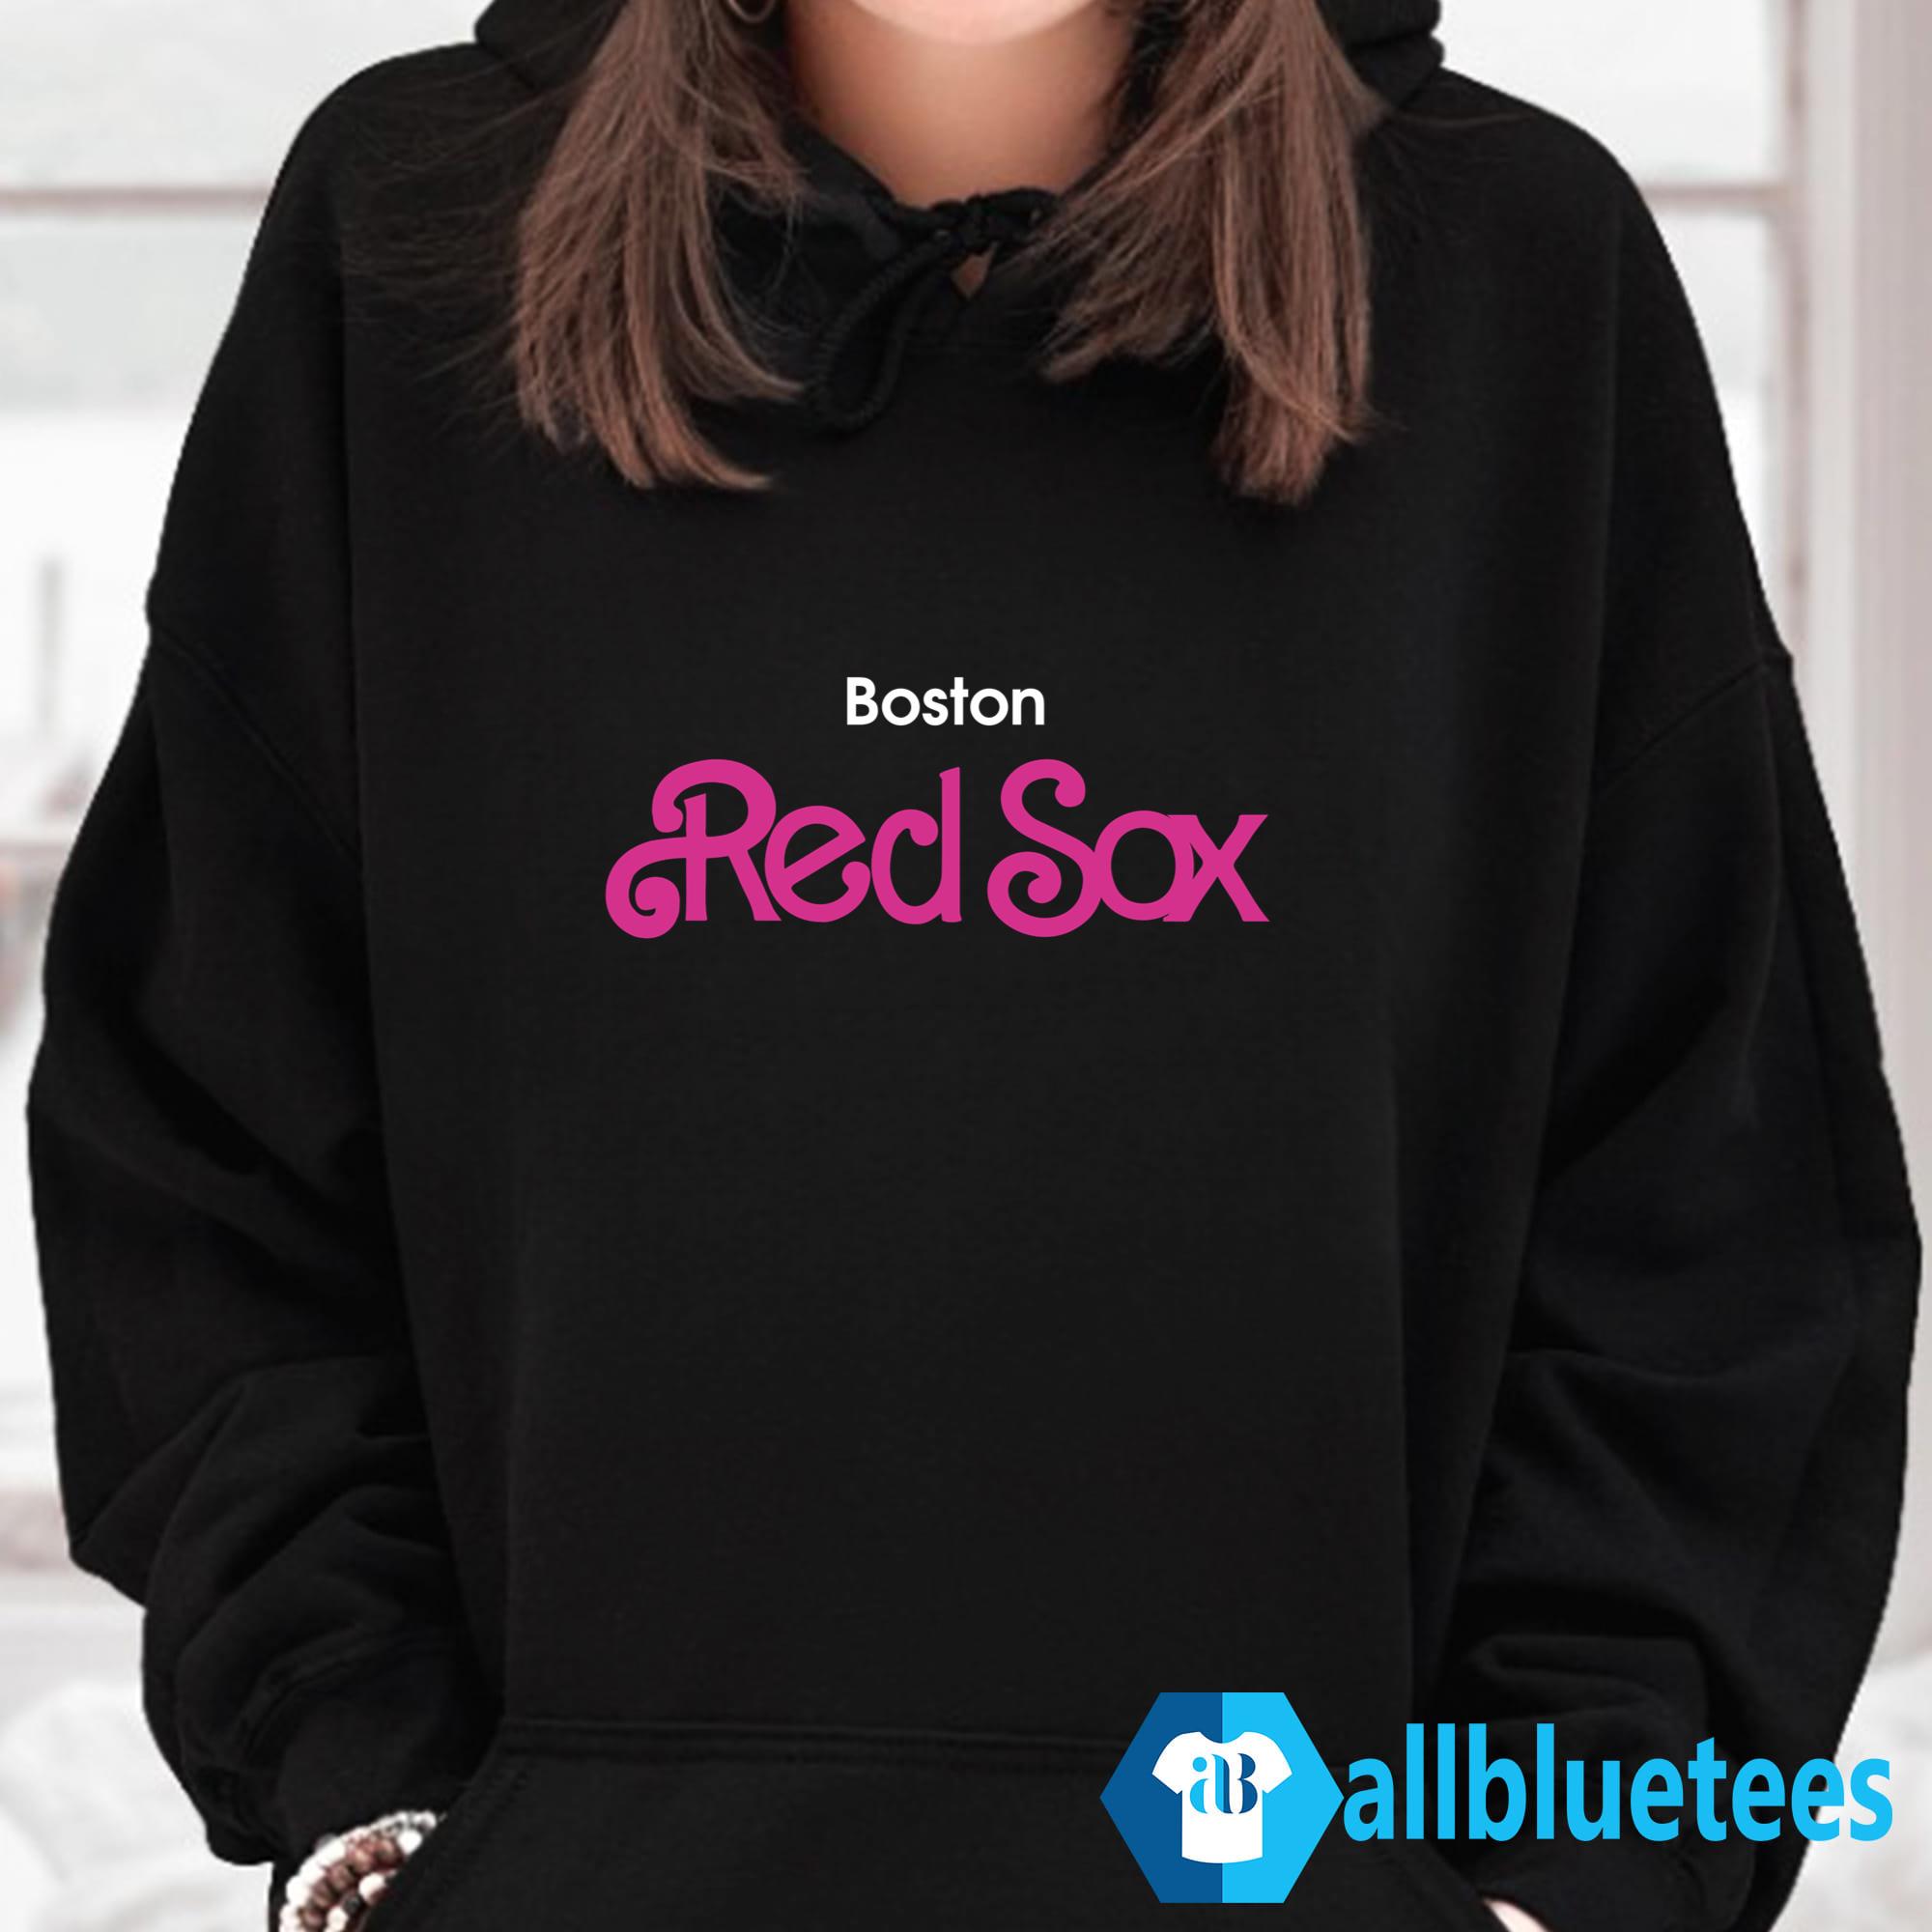 Barbie Night Kenway Park Boston Red Sox Shirt